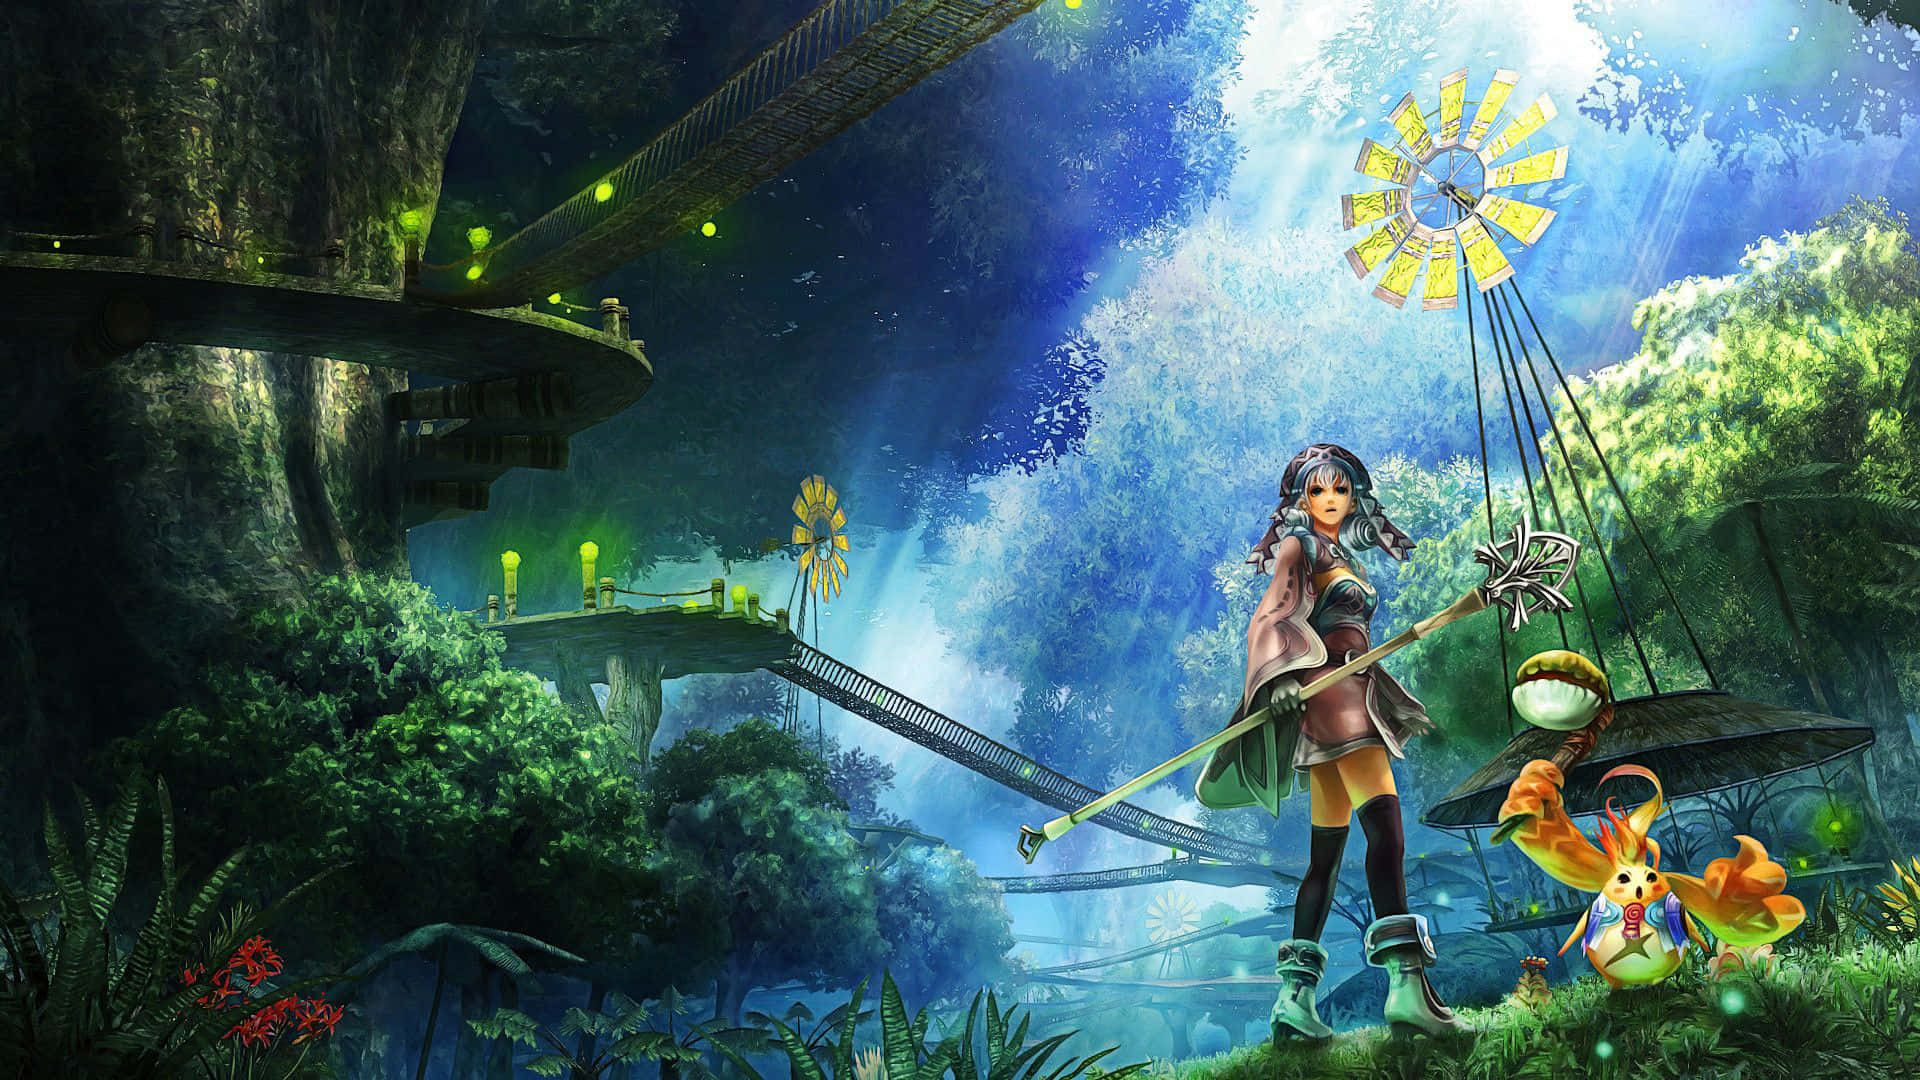 Fantasy Anime Girl - Ready to Take on the World Wallpaper